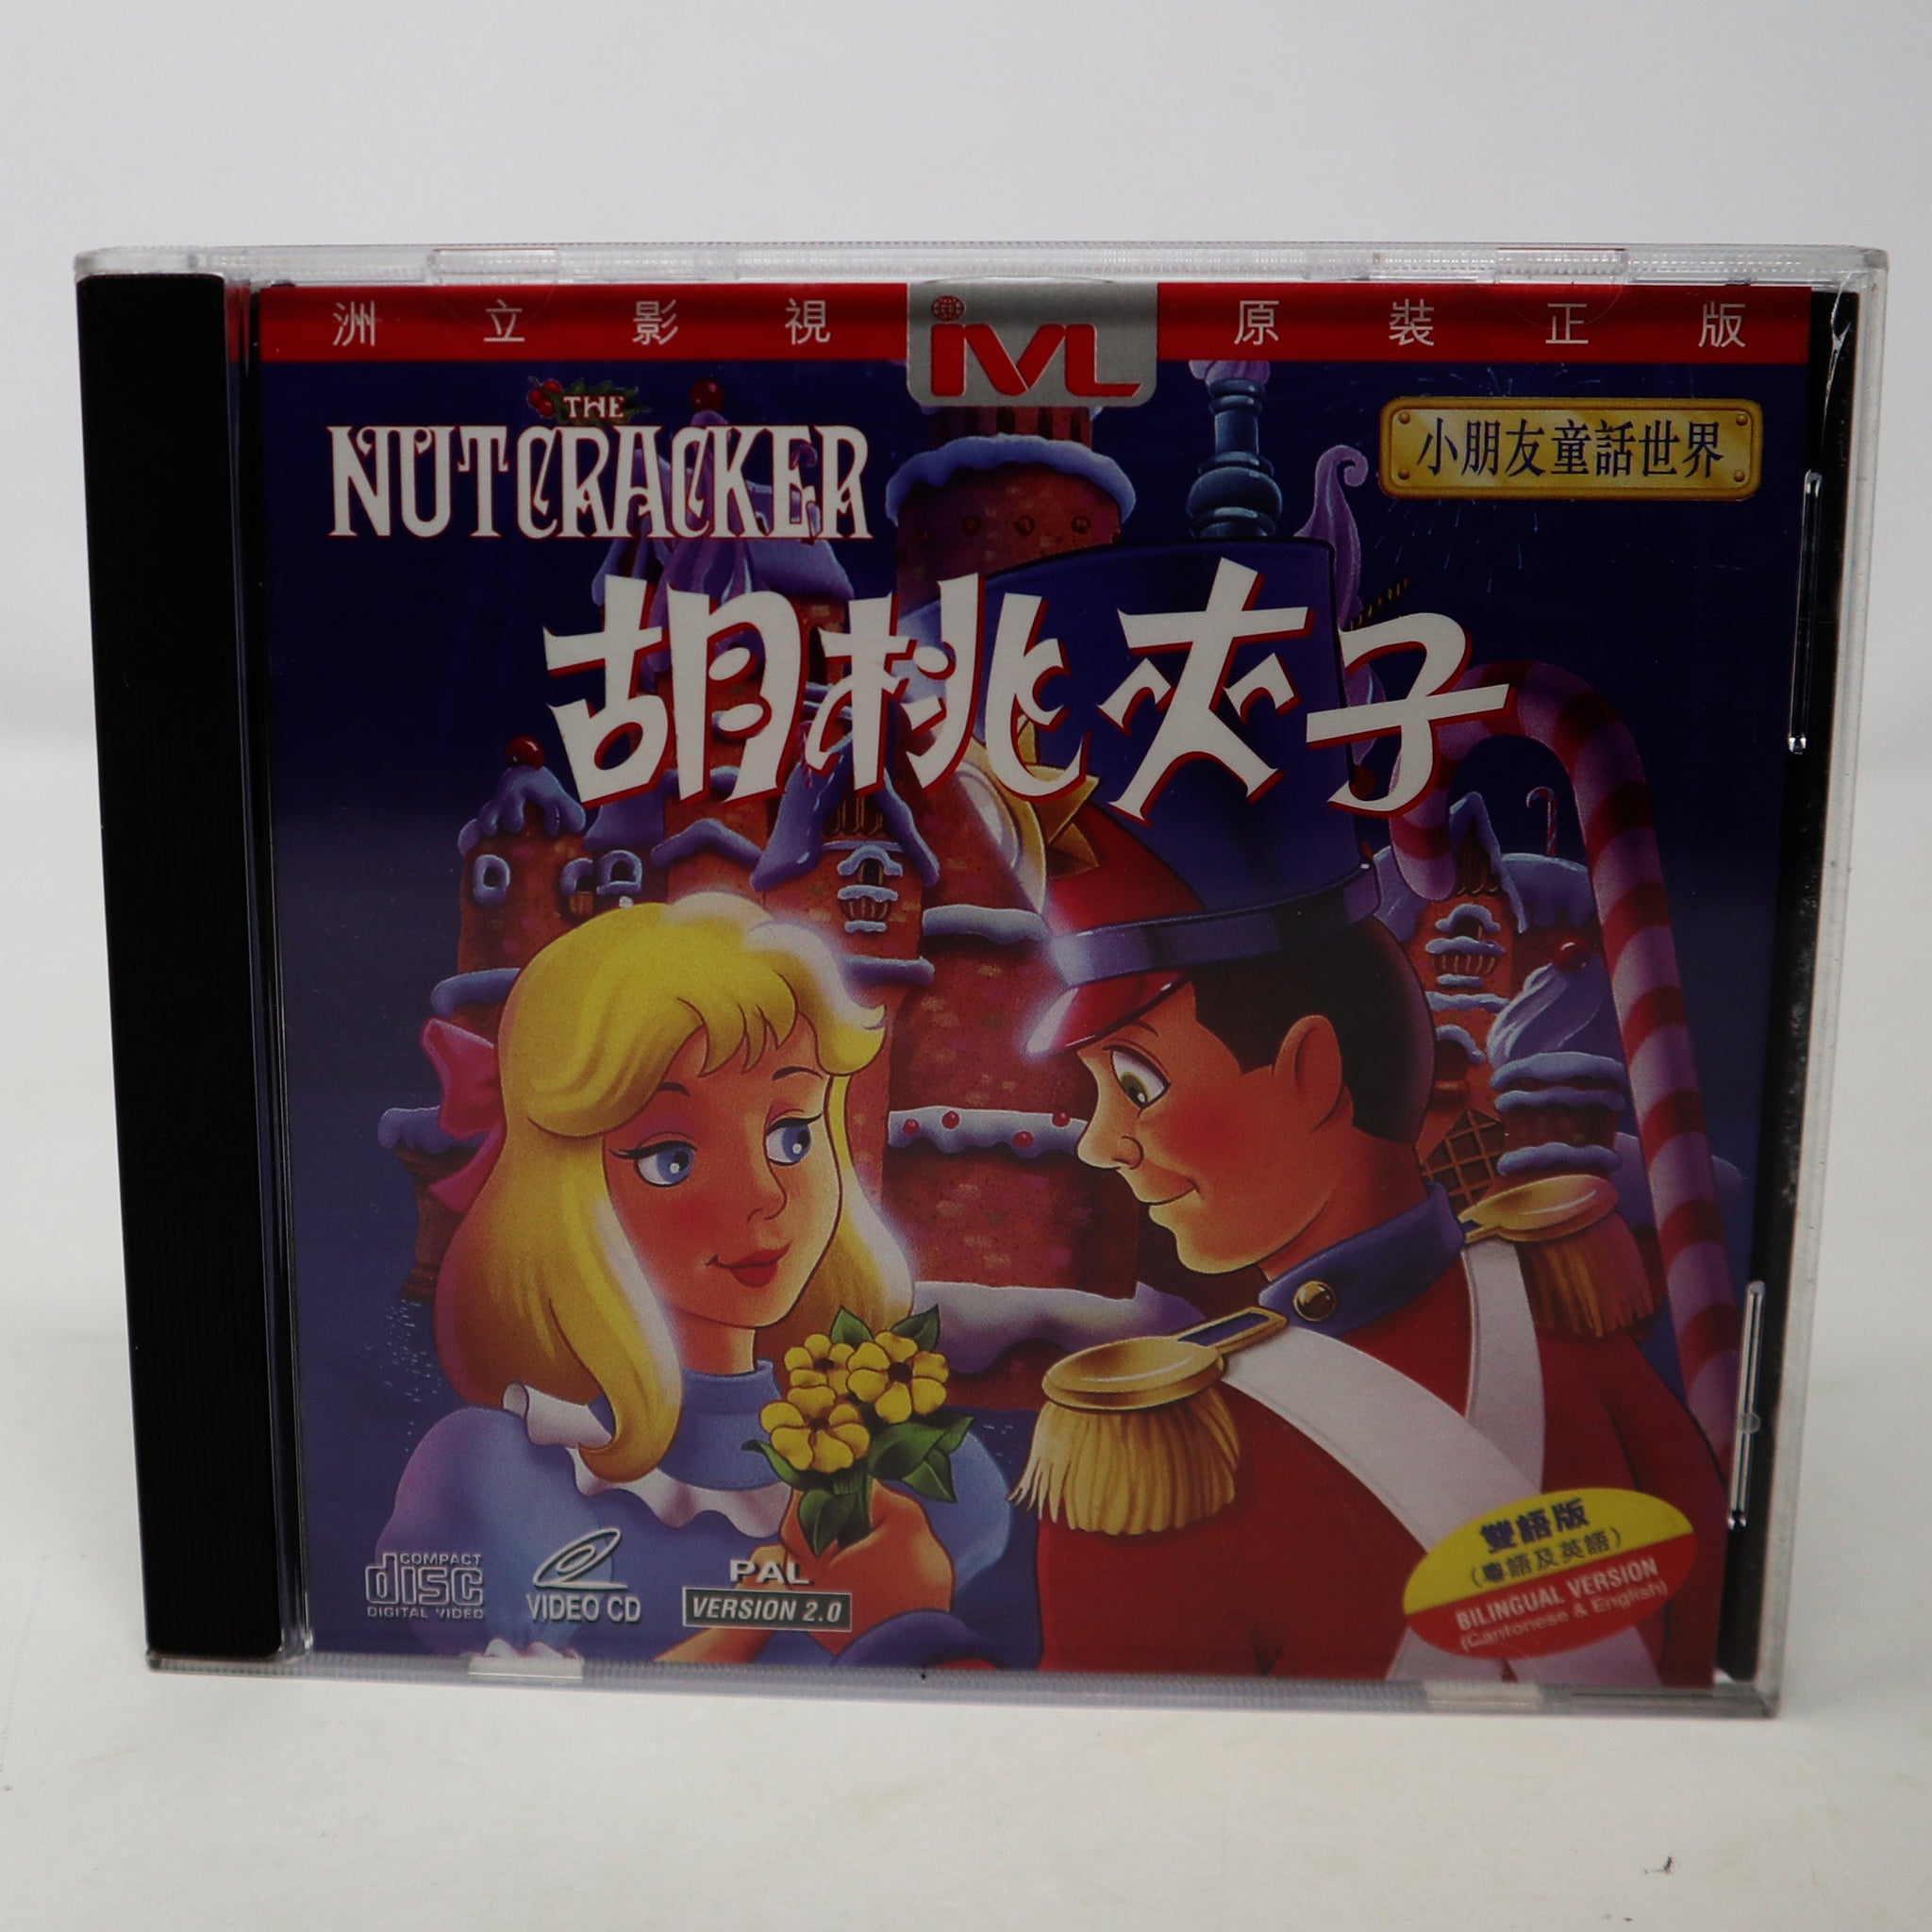 Vintage 1994 90s GoodTimes Platinum Series The Nutcracker VCD Video CD Bilingual Version (Cantonese & English) Pal 2.0 Rare